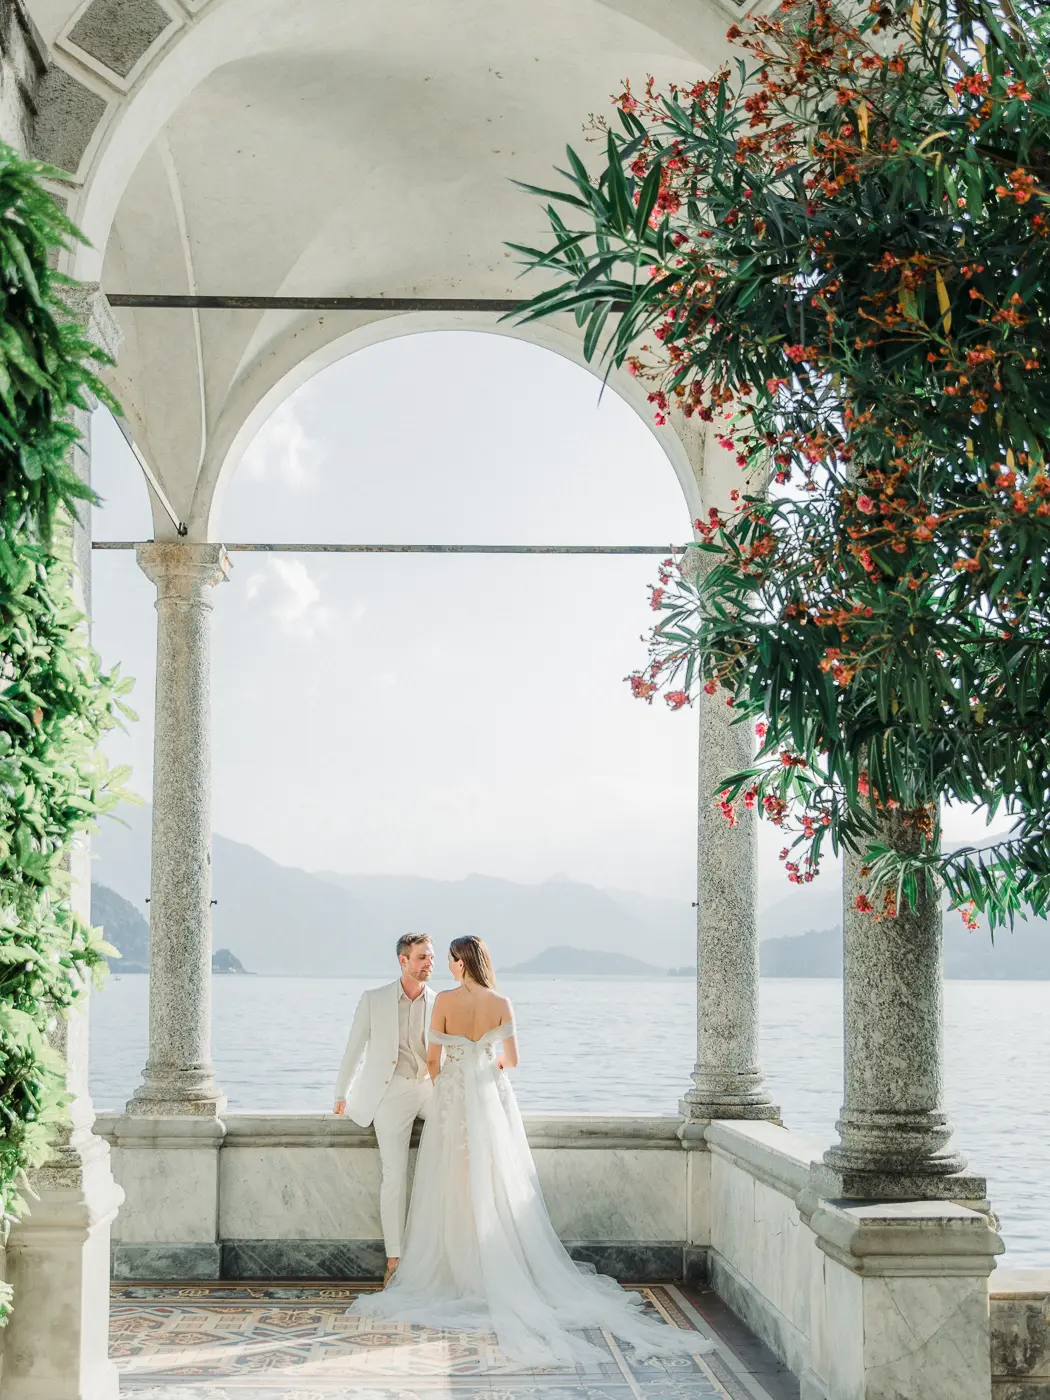 Sophistication and elegant wedding photos on Lake Como